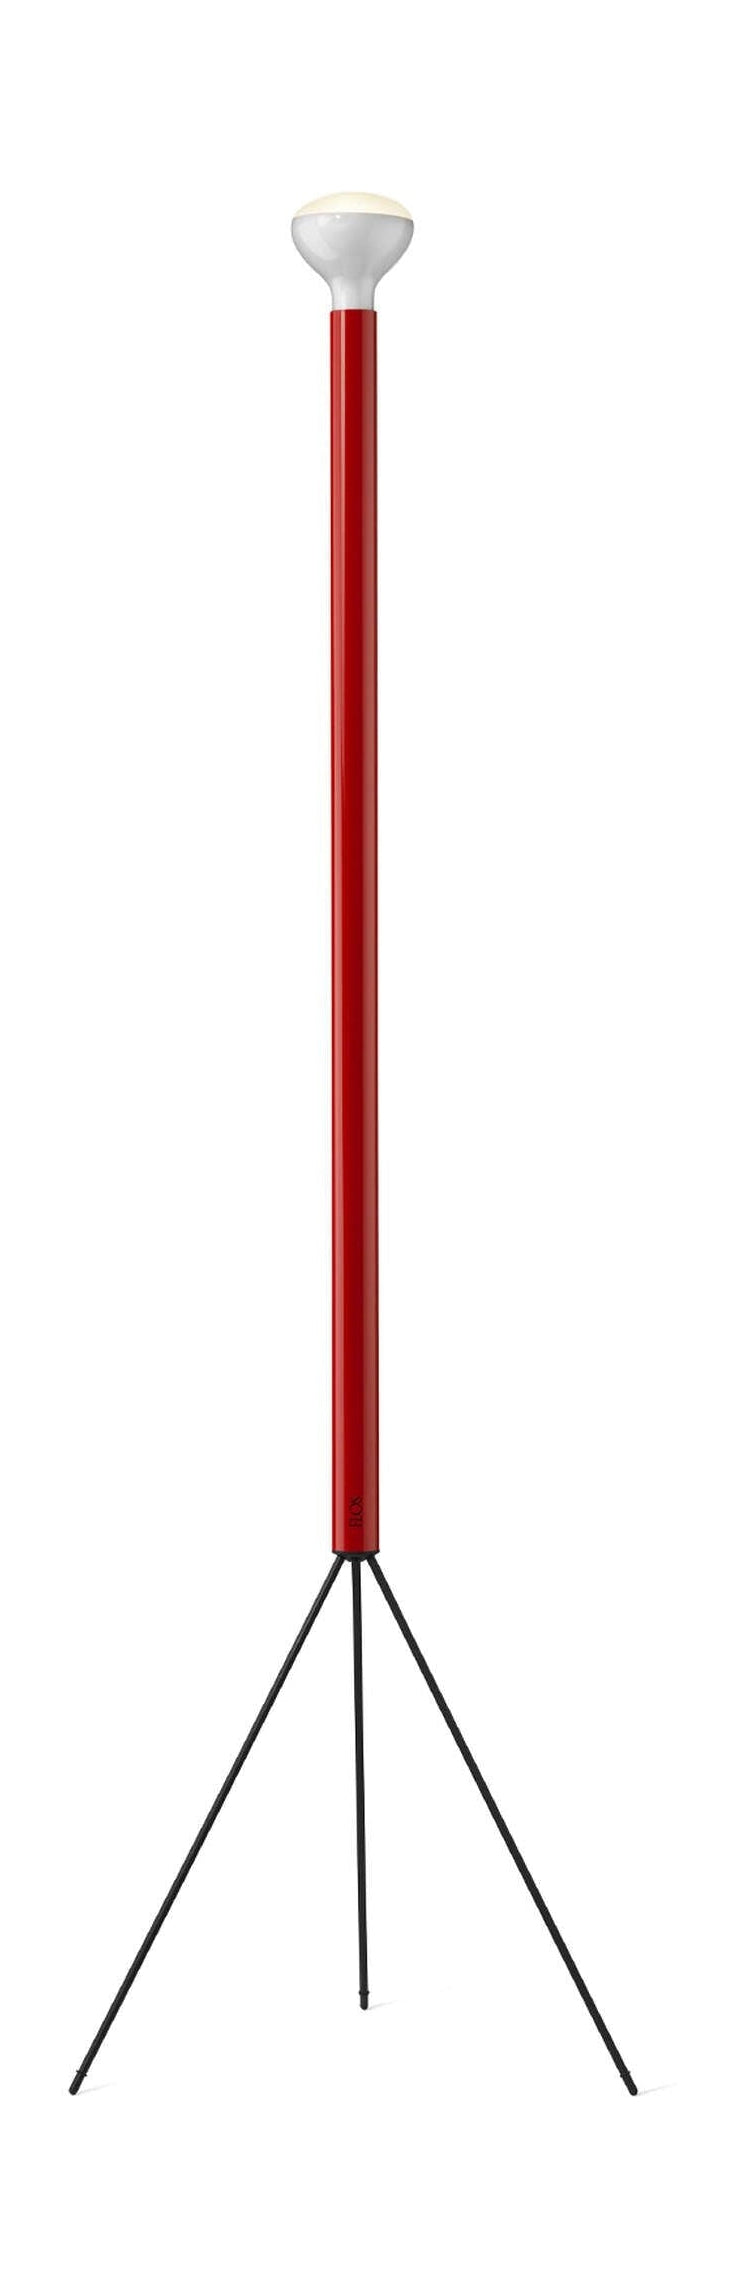 Flos Luminator Floor Lamp, Red